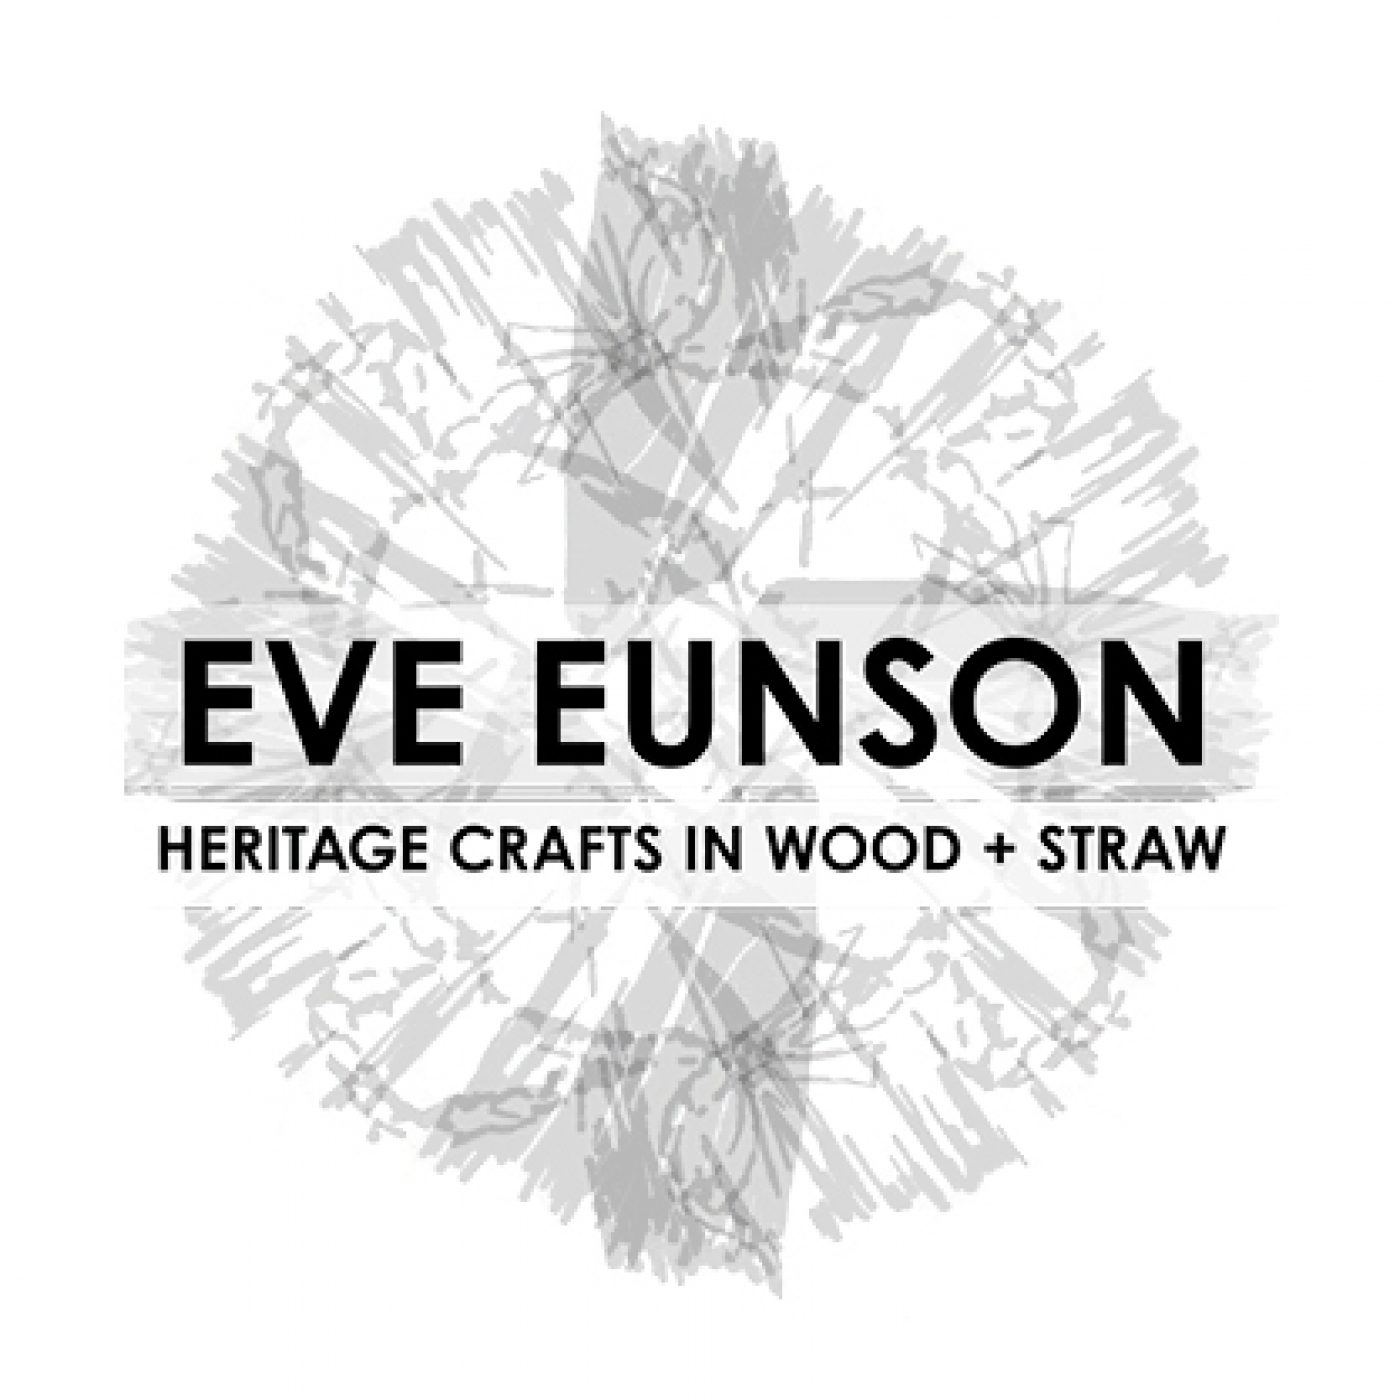 Eve Eunson - Fair Isle Chairs image